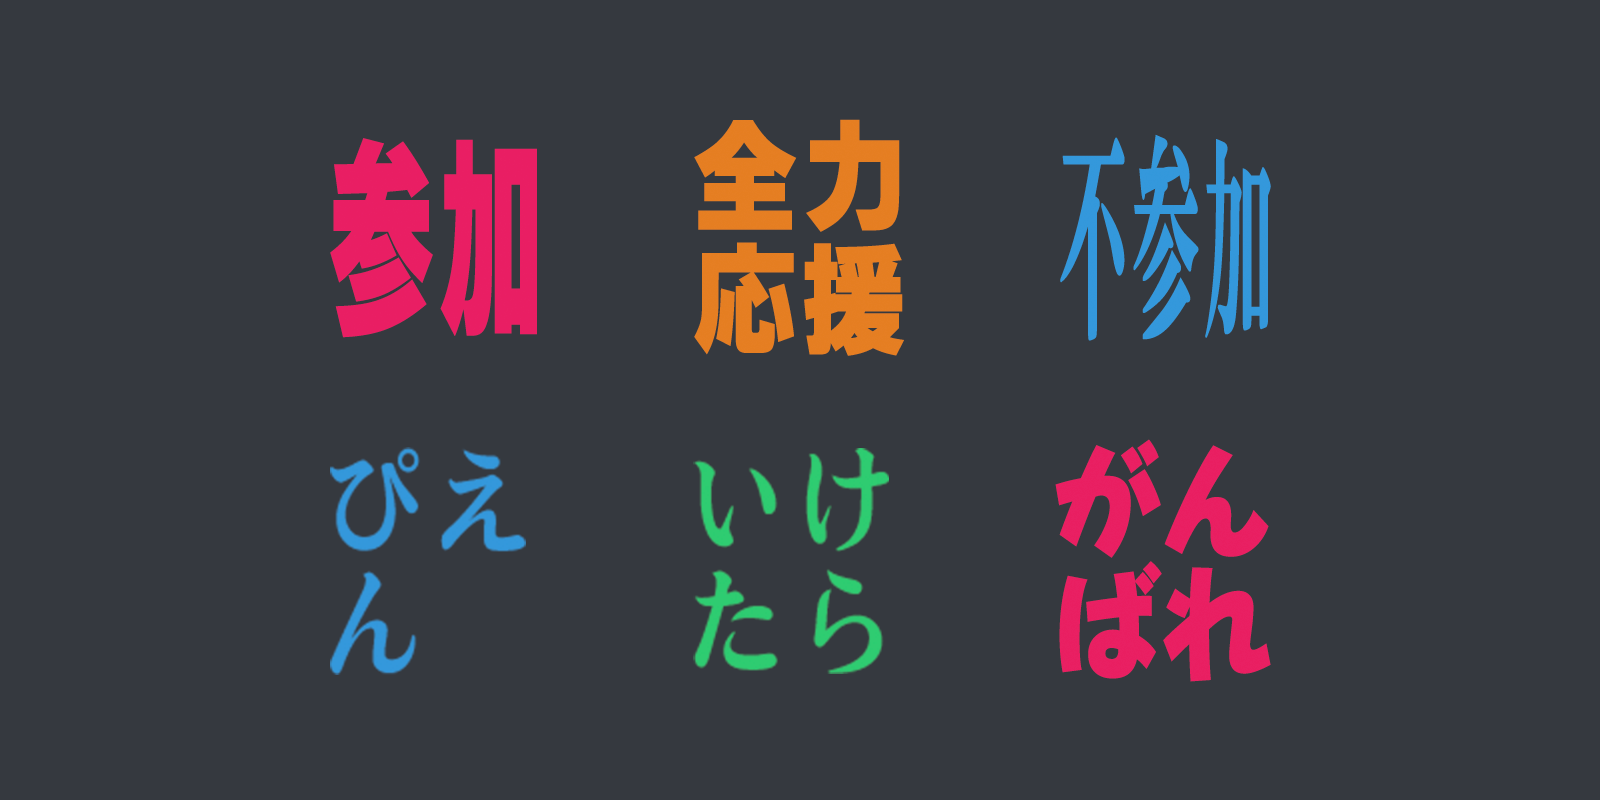 Discordのカスタム絵文字でも使いやすい ロールで設定できる色コードメモ Akatsuki Games